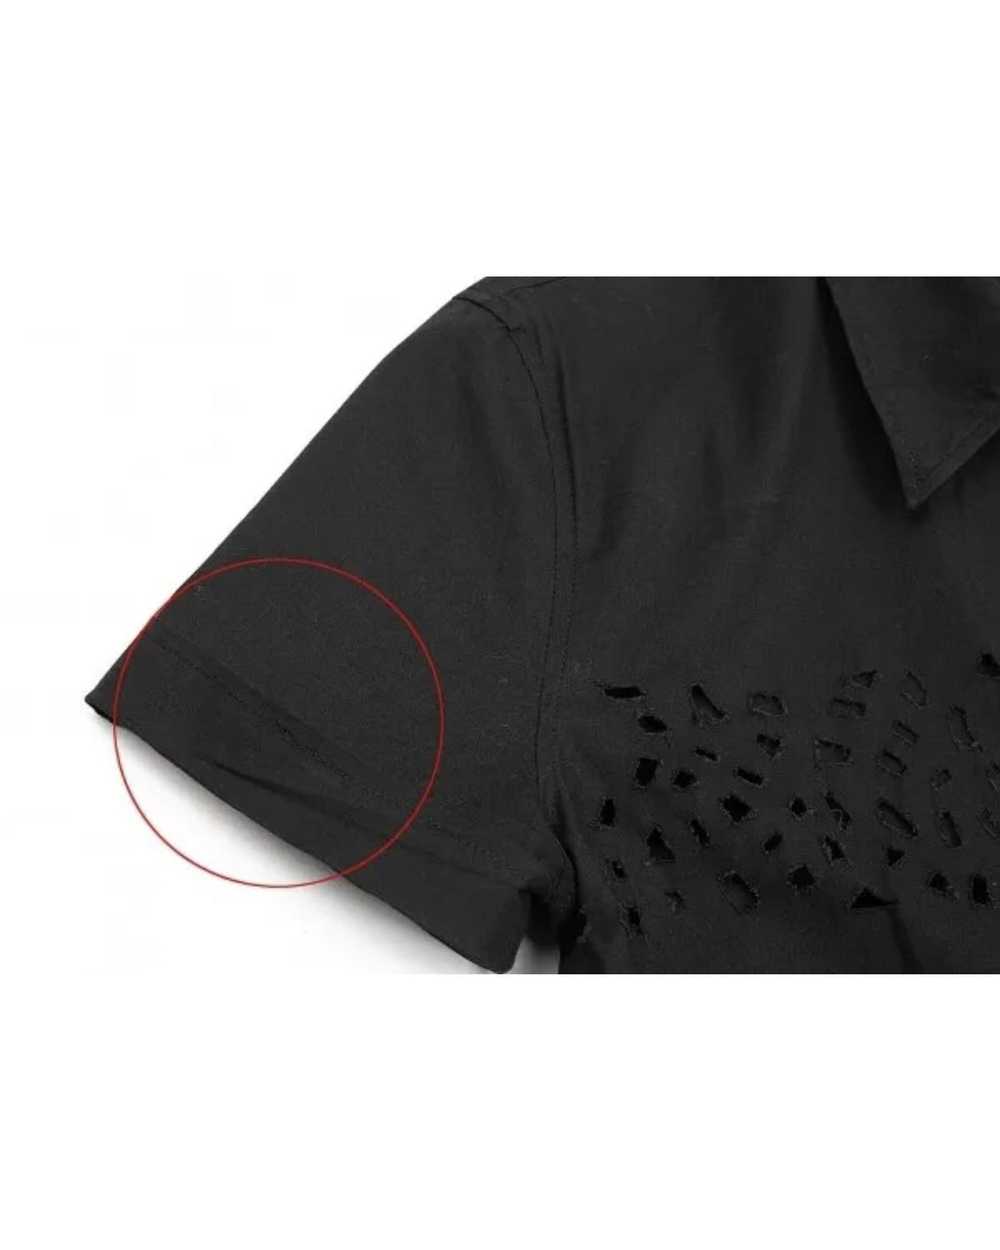 Jean Paul Gaultier Laser-Cut Zip-Up Shirt - image 7